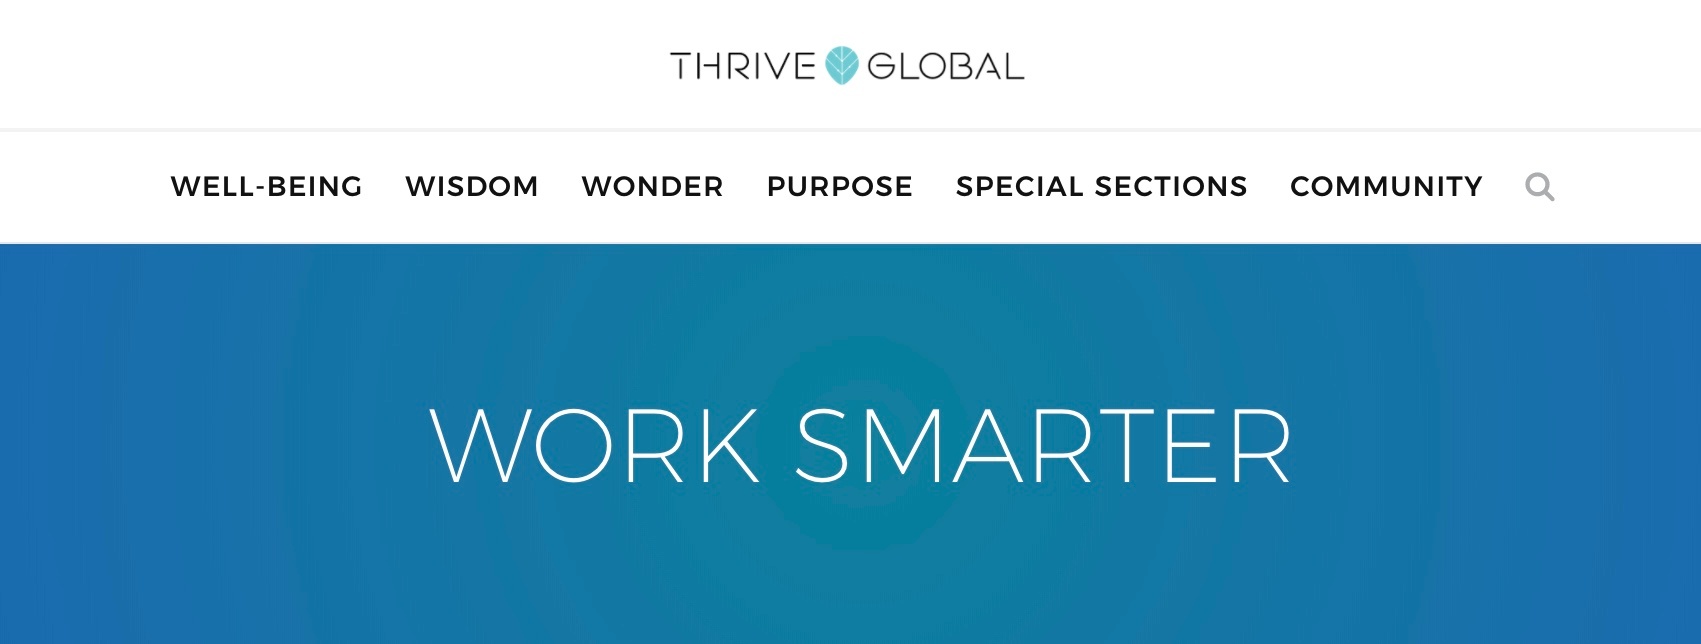 8_workplace_blogs_2018_thrive_global.jpeg